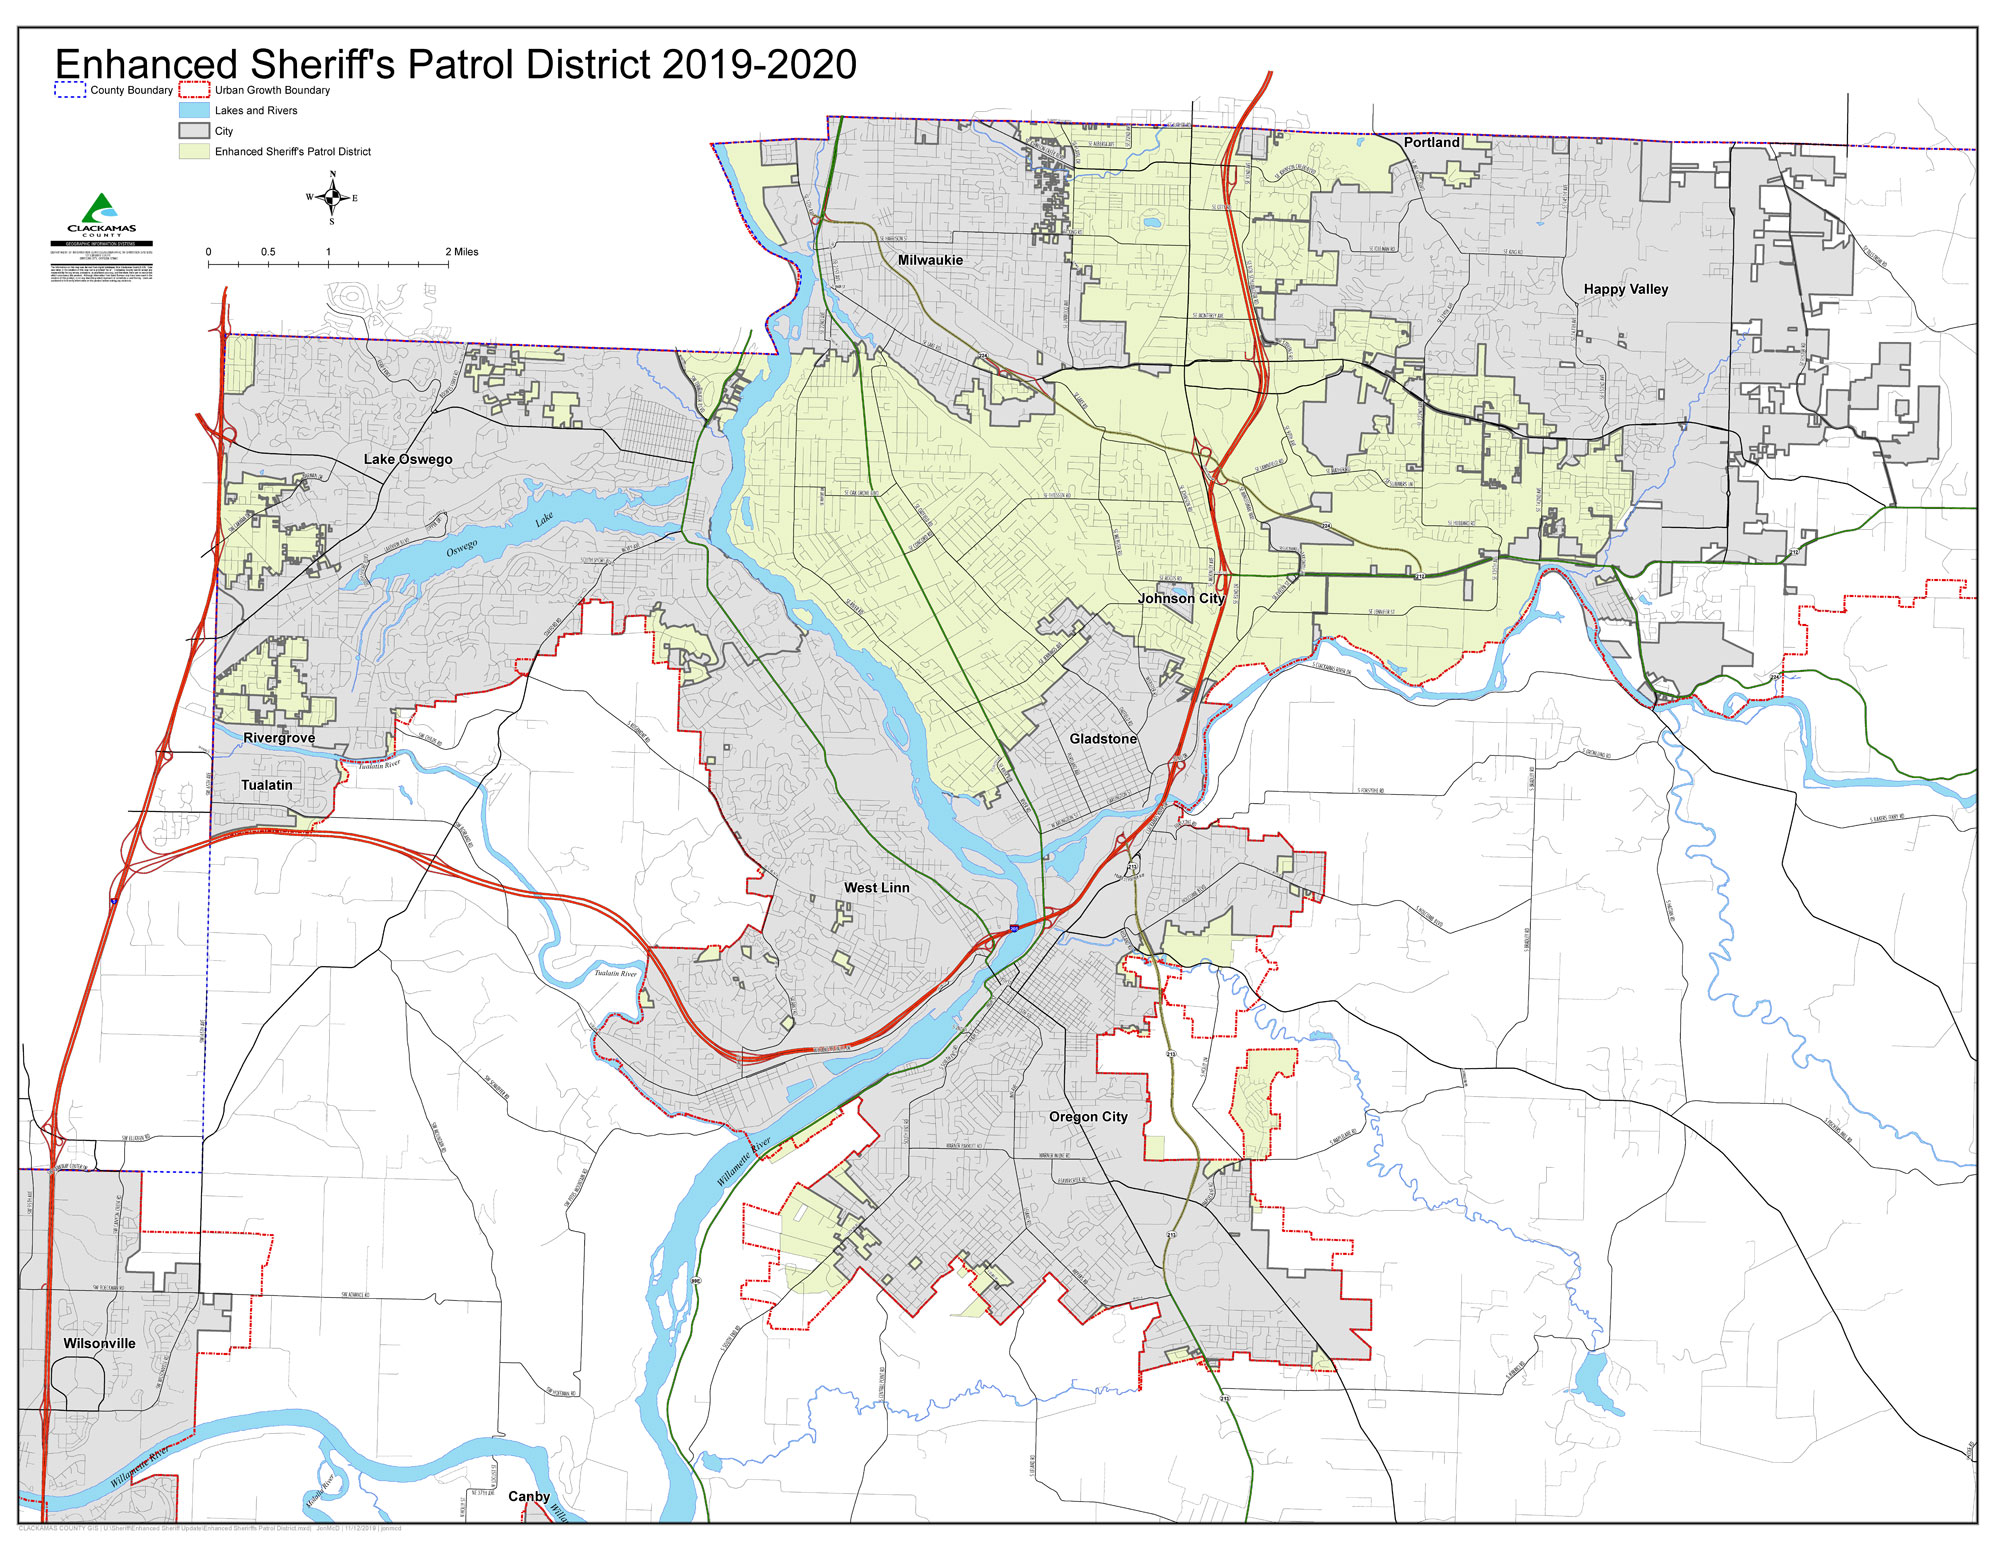 Enhanced Law Enforcement District map (click to enlarge)